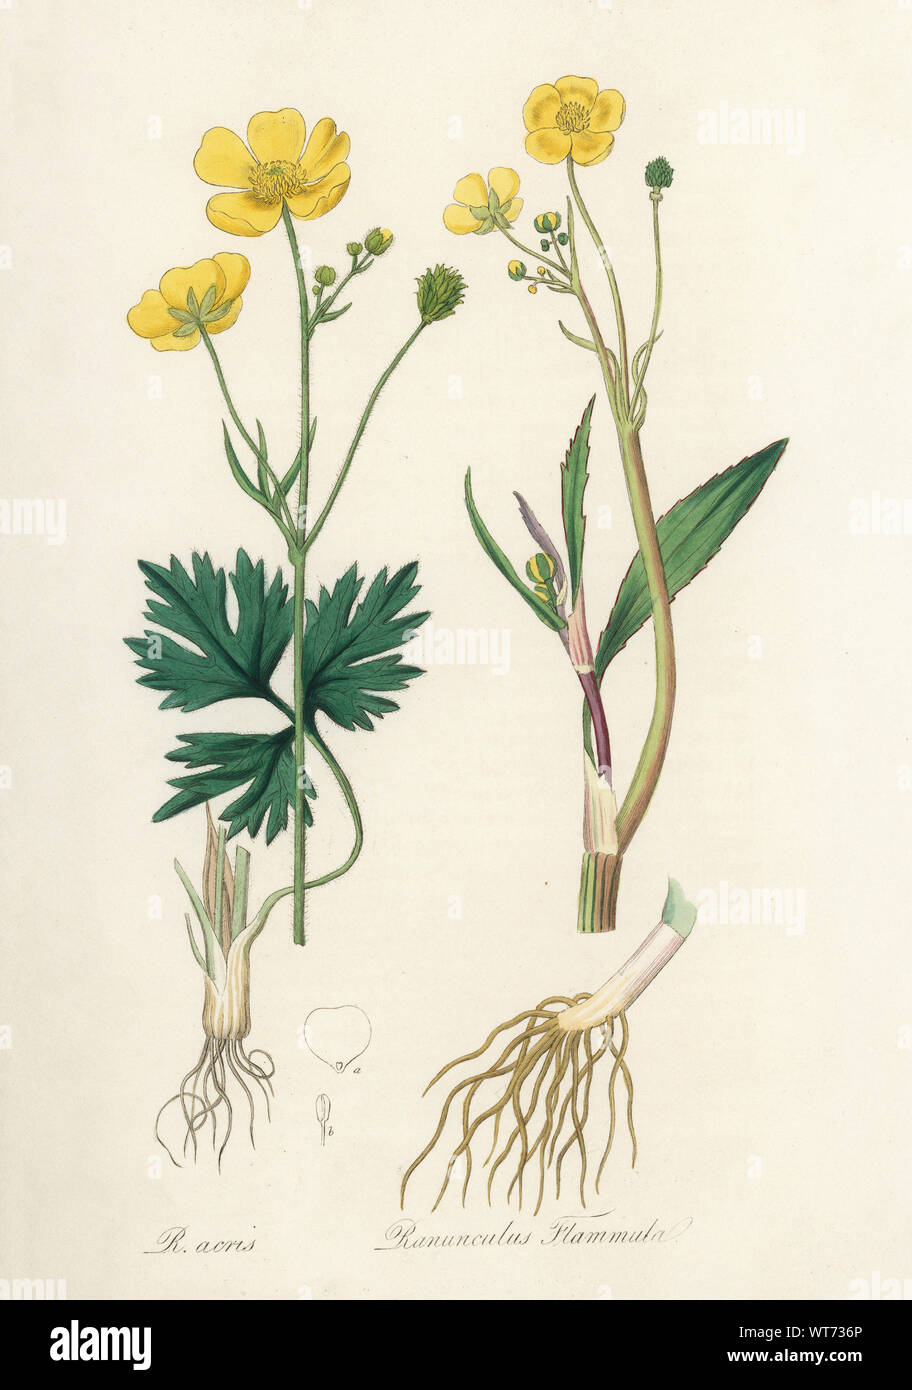 Ranunculus Flammula - Watercolor Print 19th Century Stock Photo